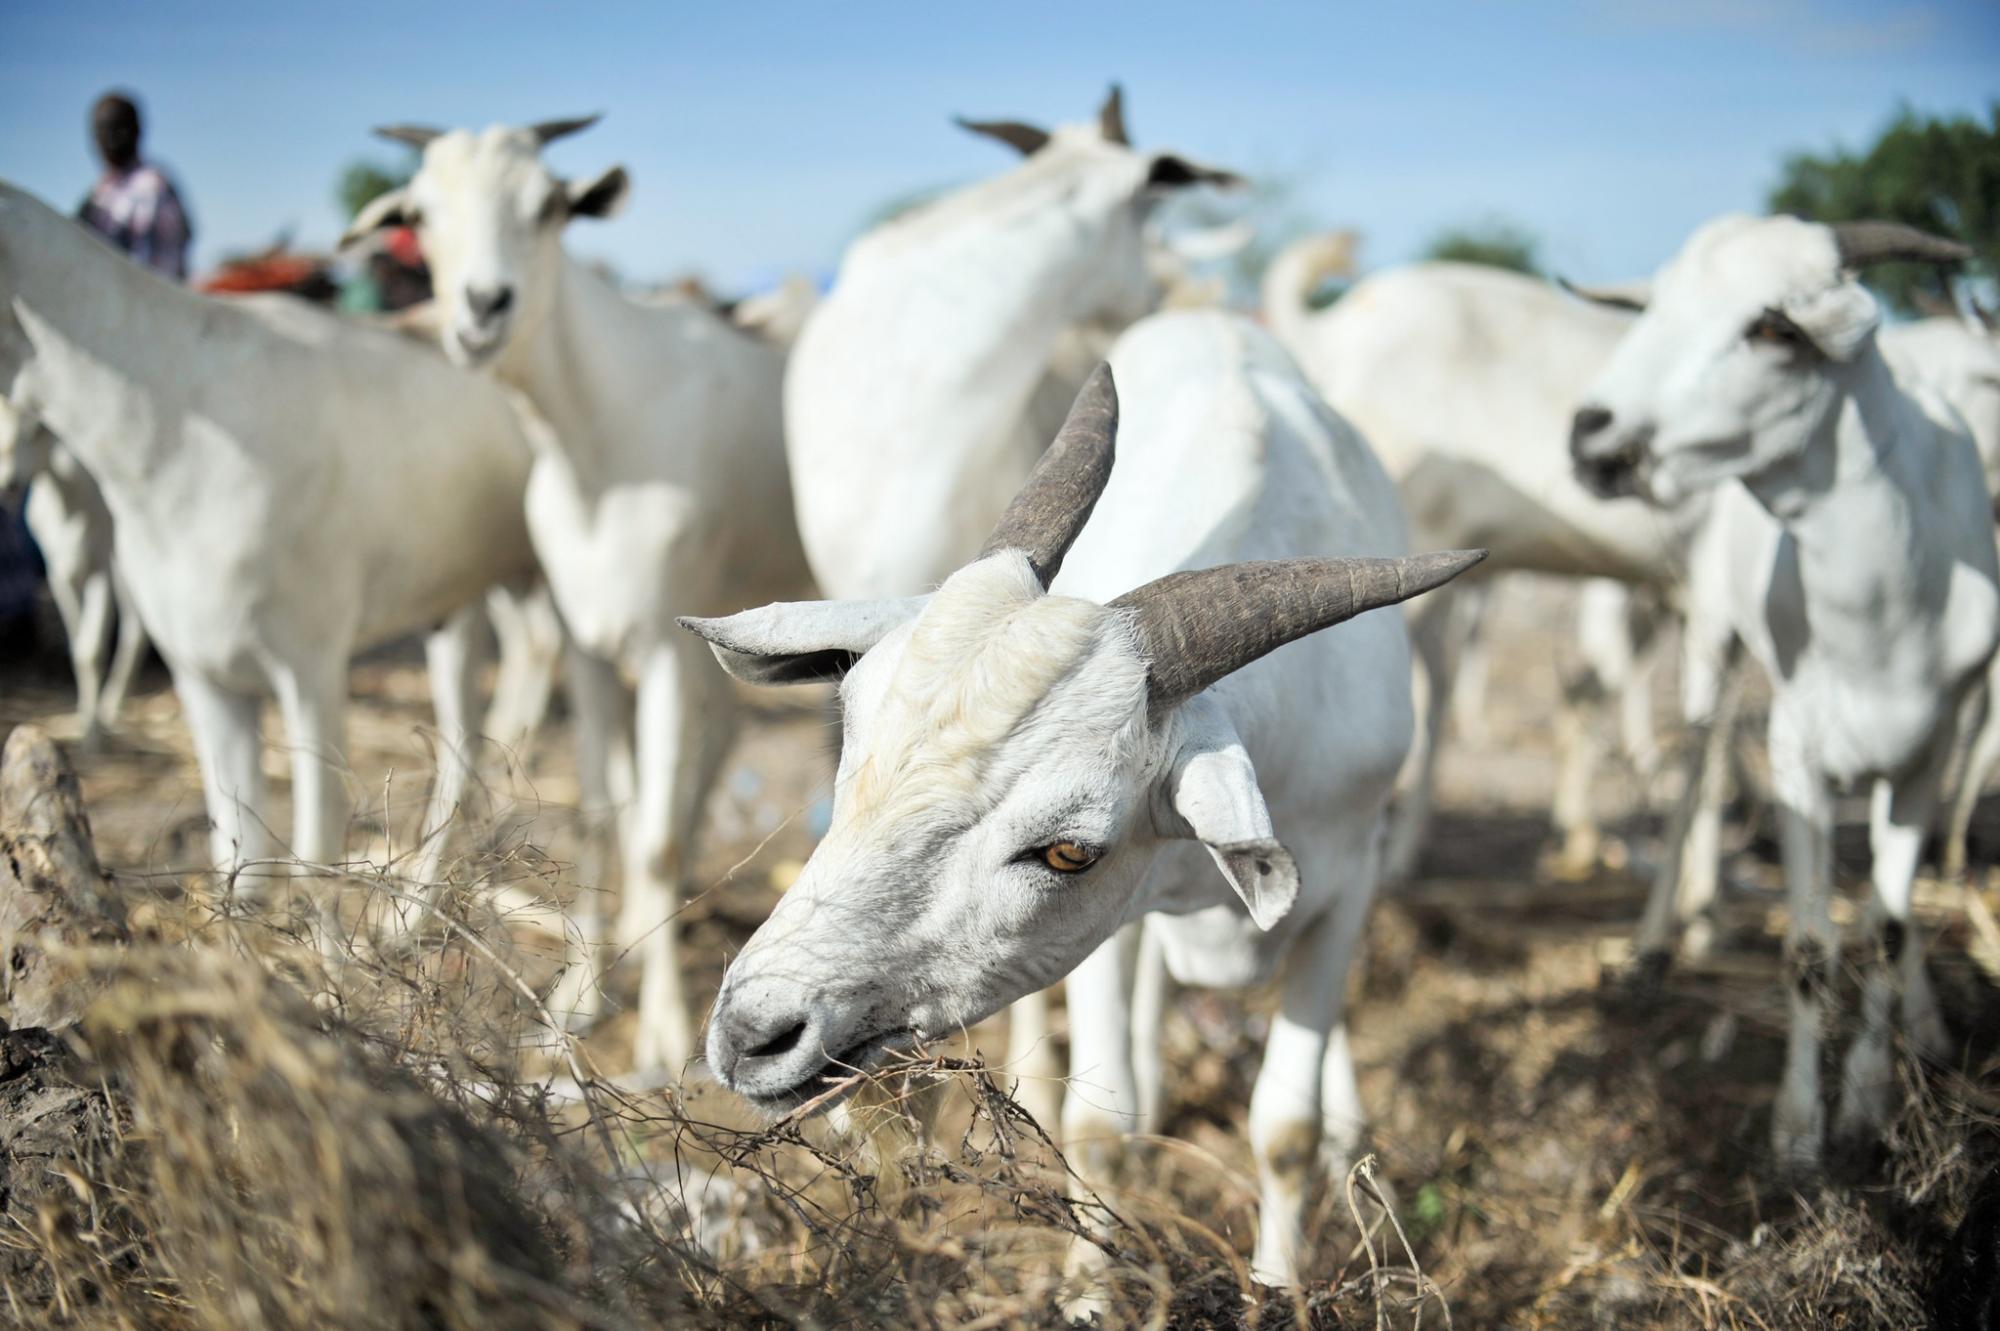 Goats eat grass at Bakara animal market.